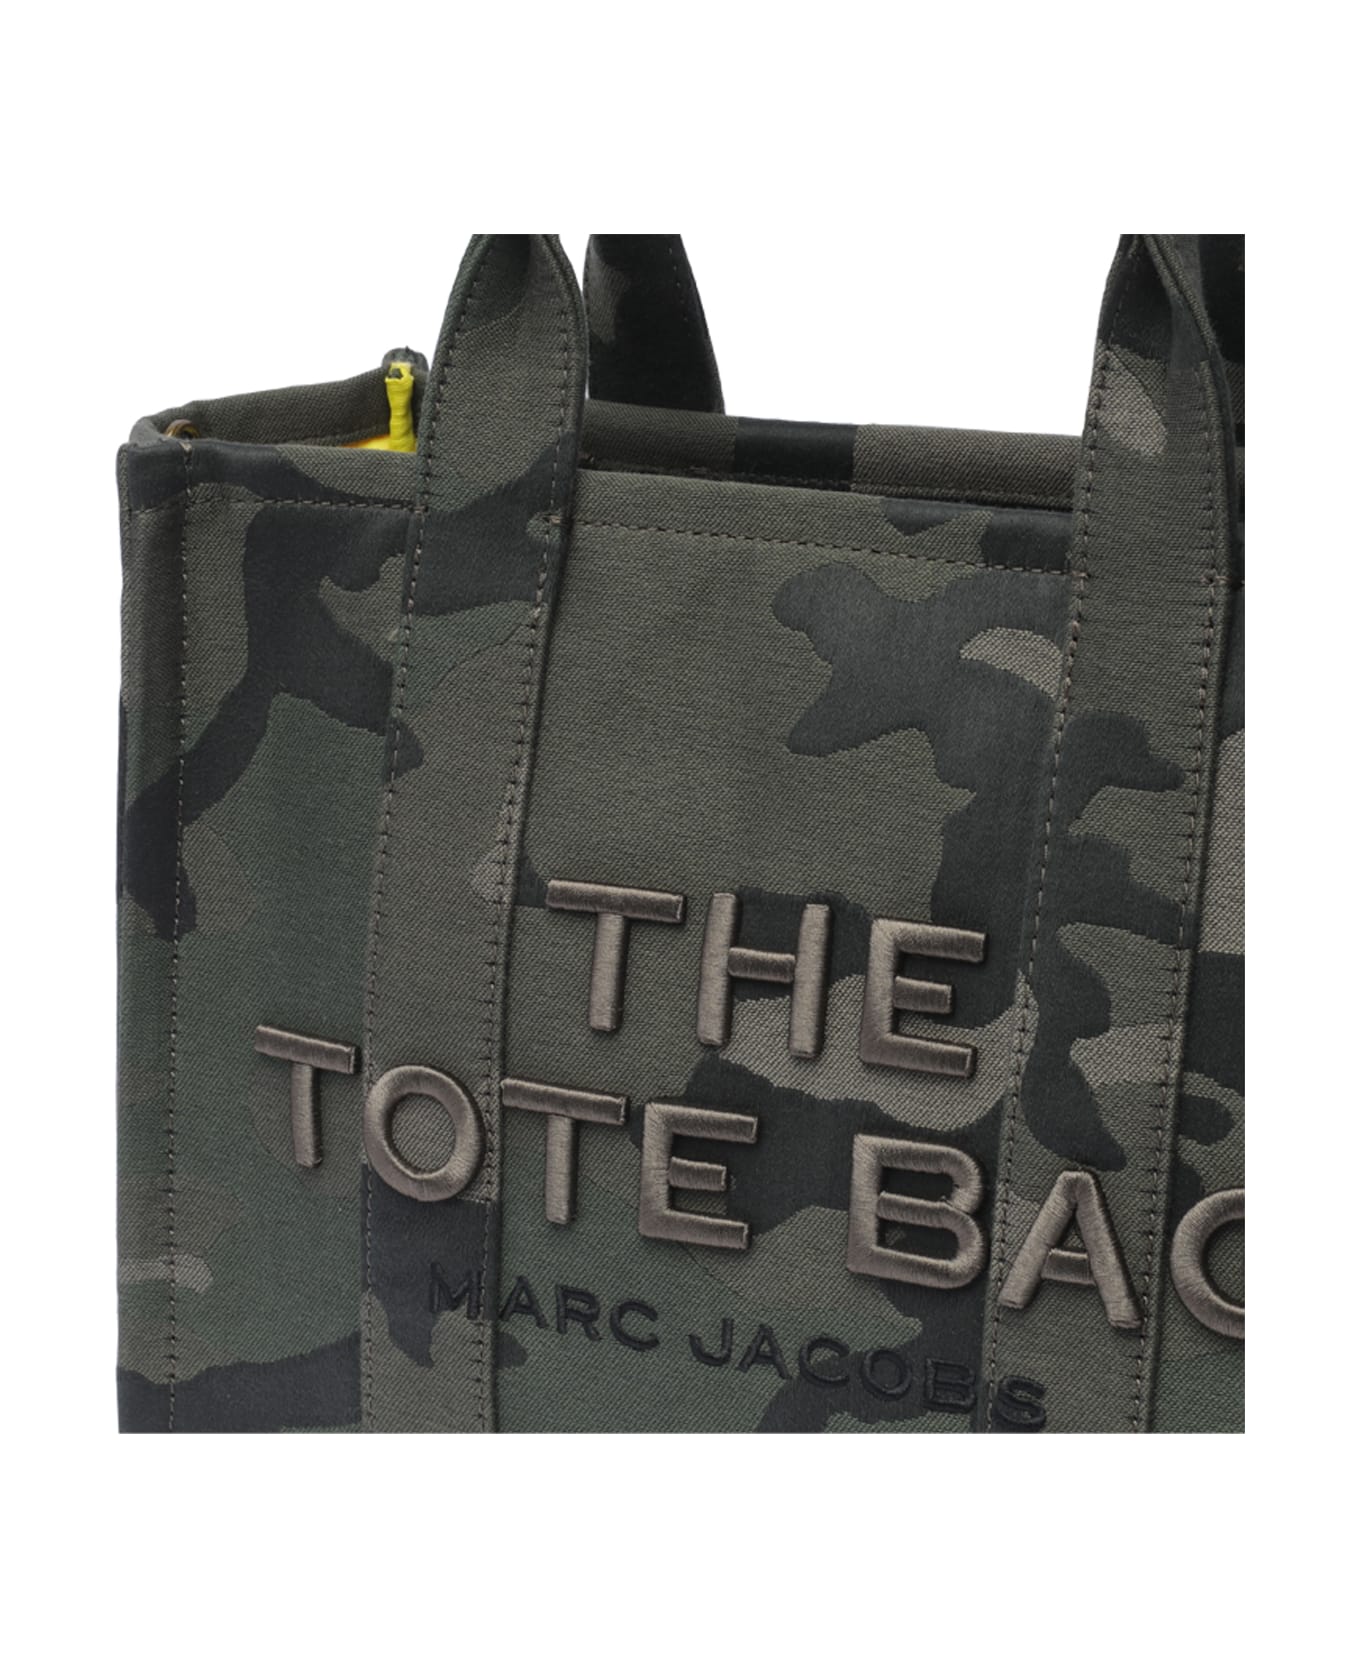 Marc Jacobs The Medium Tote Bag - Camo Multi トートバッグ